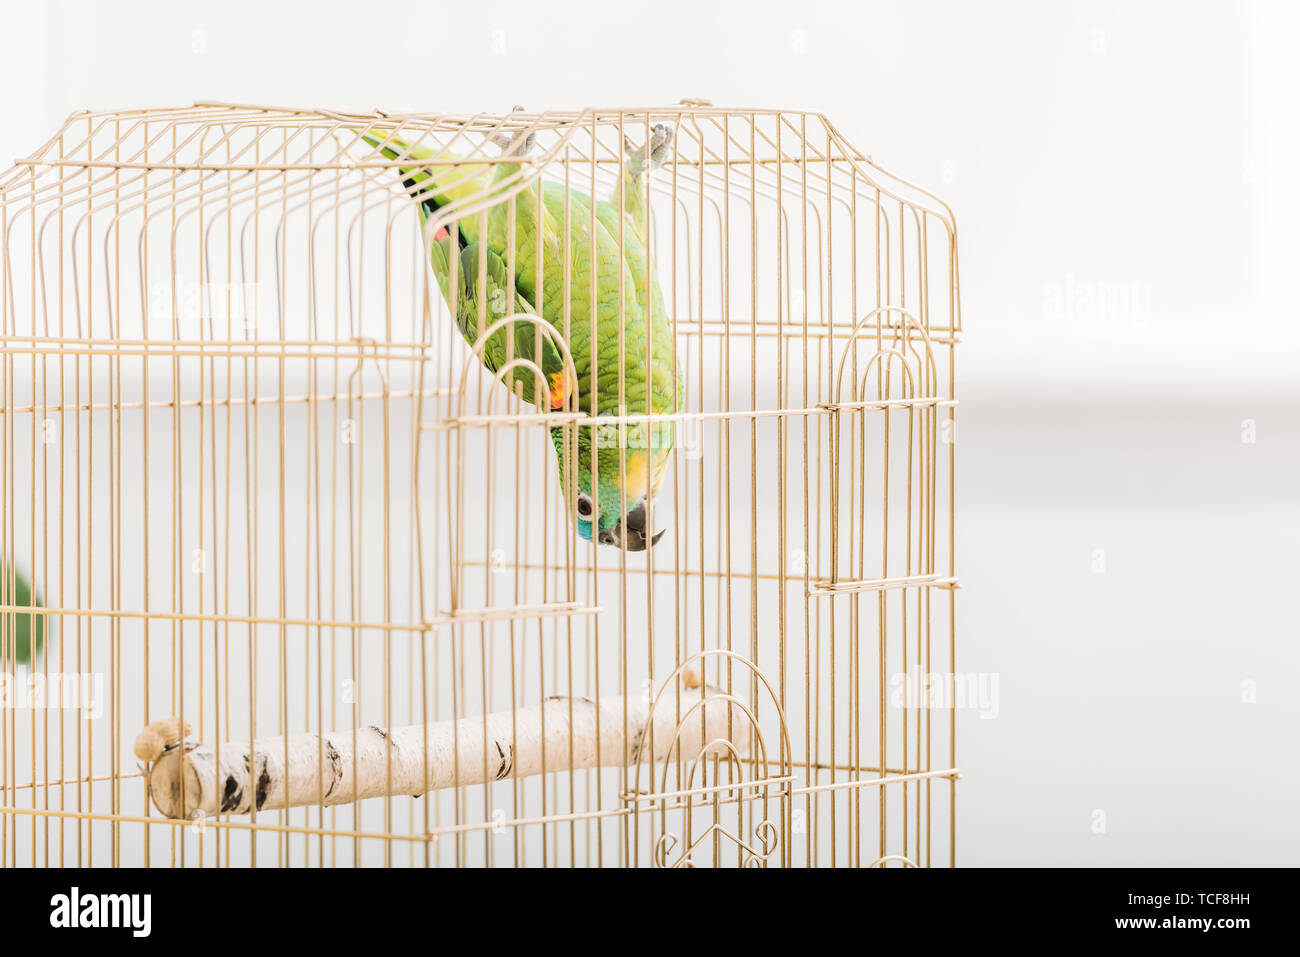 Lustig Grün Amazon Parrot hängenden Kopf unten in Vogelkäfig  Stockfotografie - Alamy